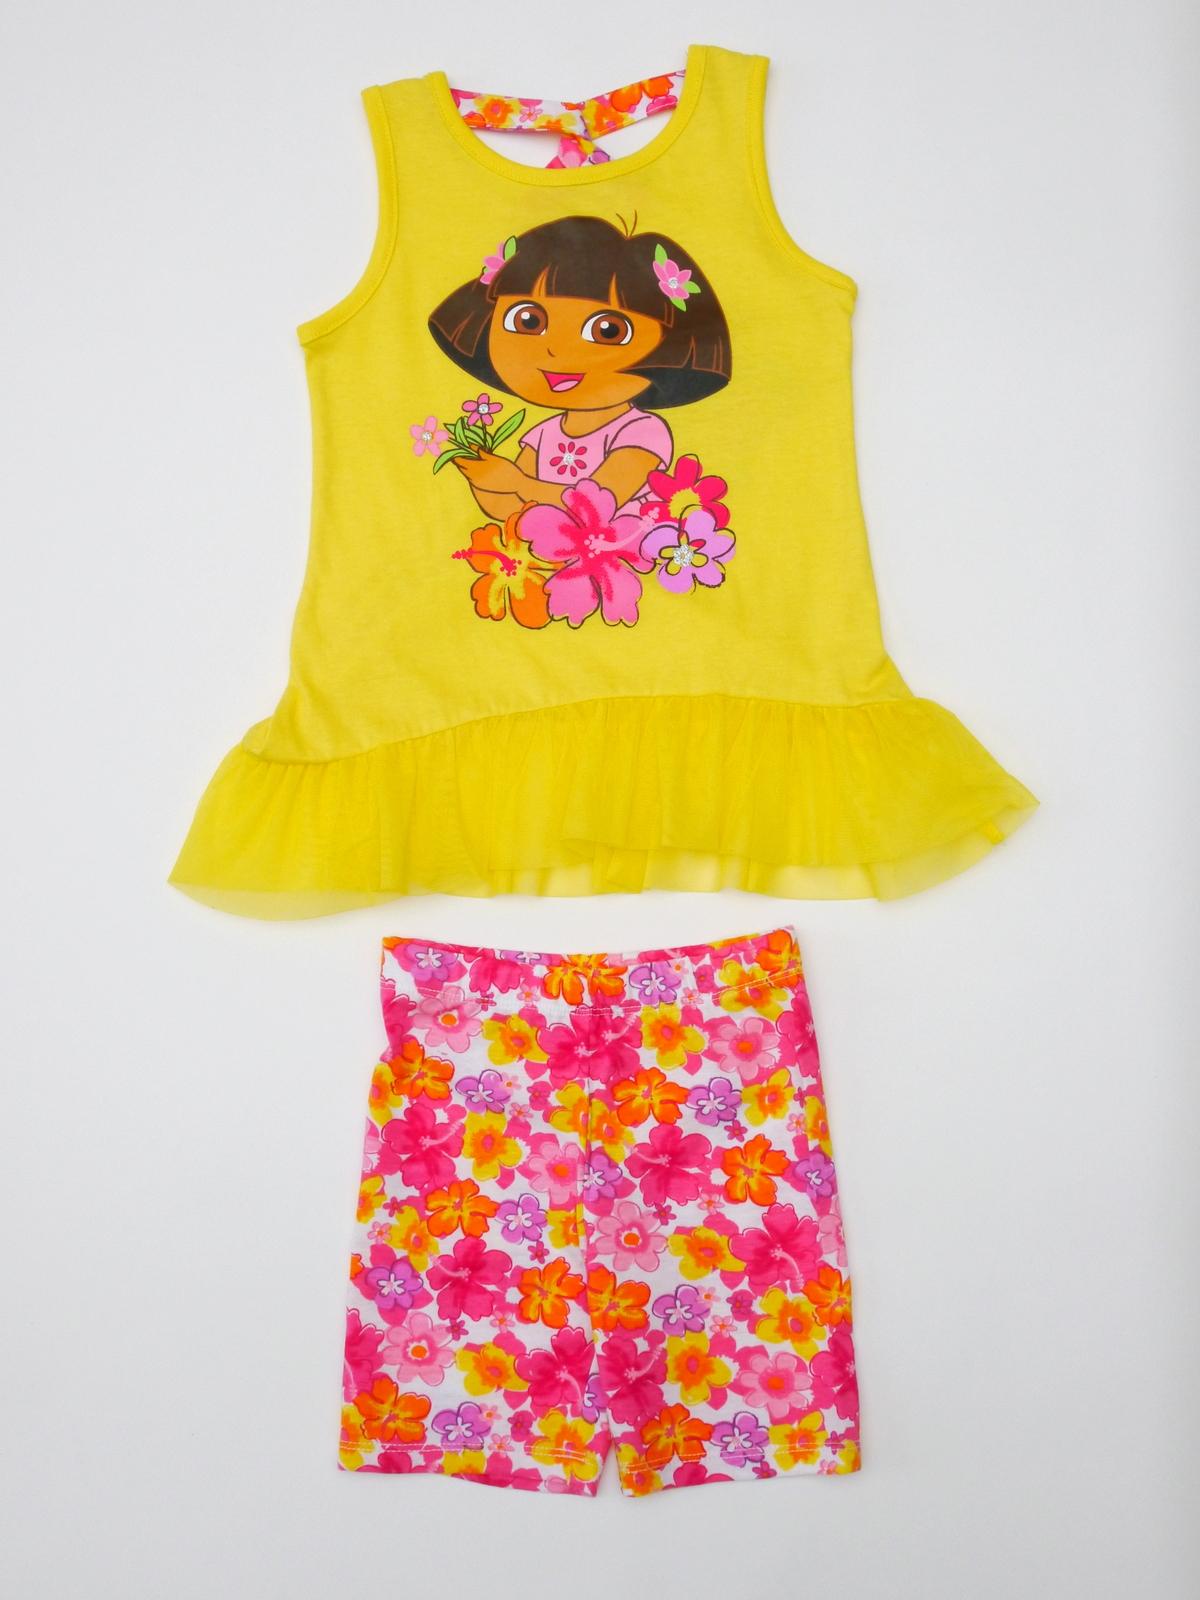 Nickelodeon Girl's Tank Top & Shorts - Dora The Explorer